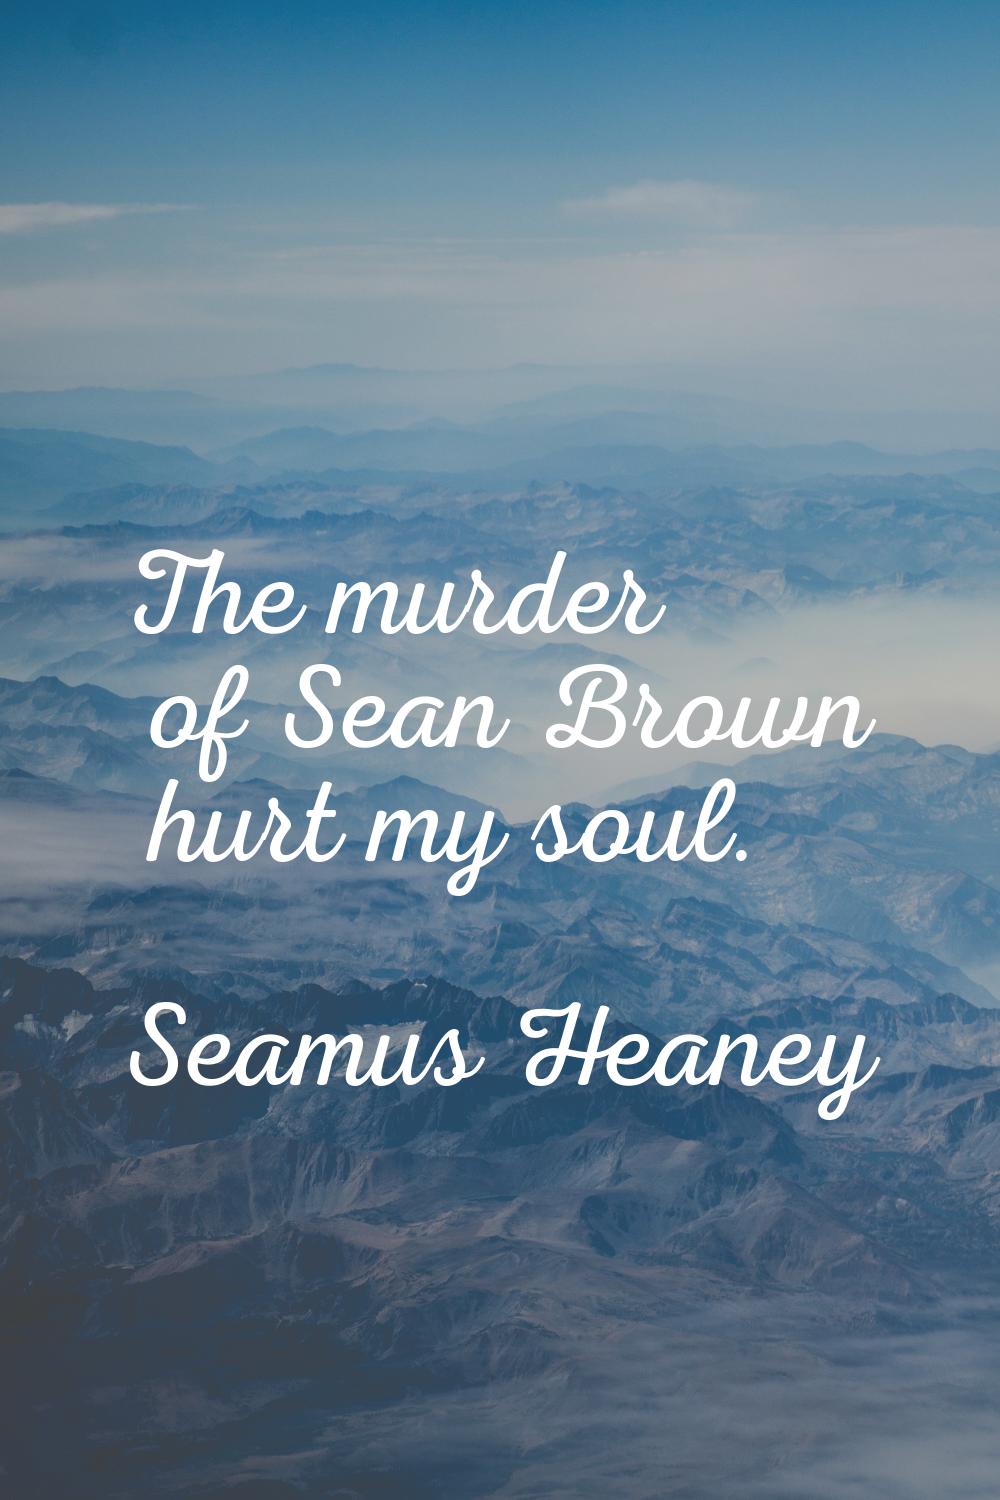 The murder of Sean Brown hurt my soul.